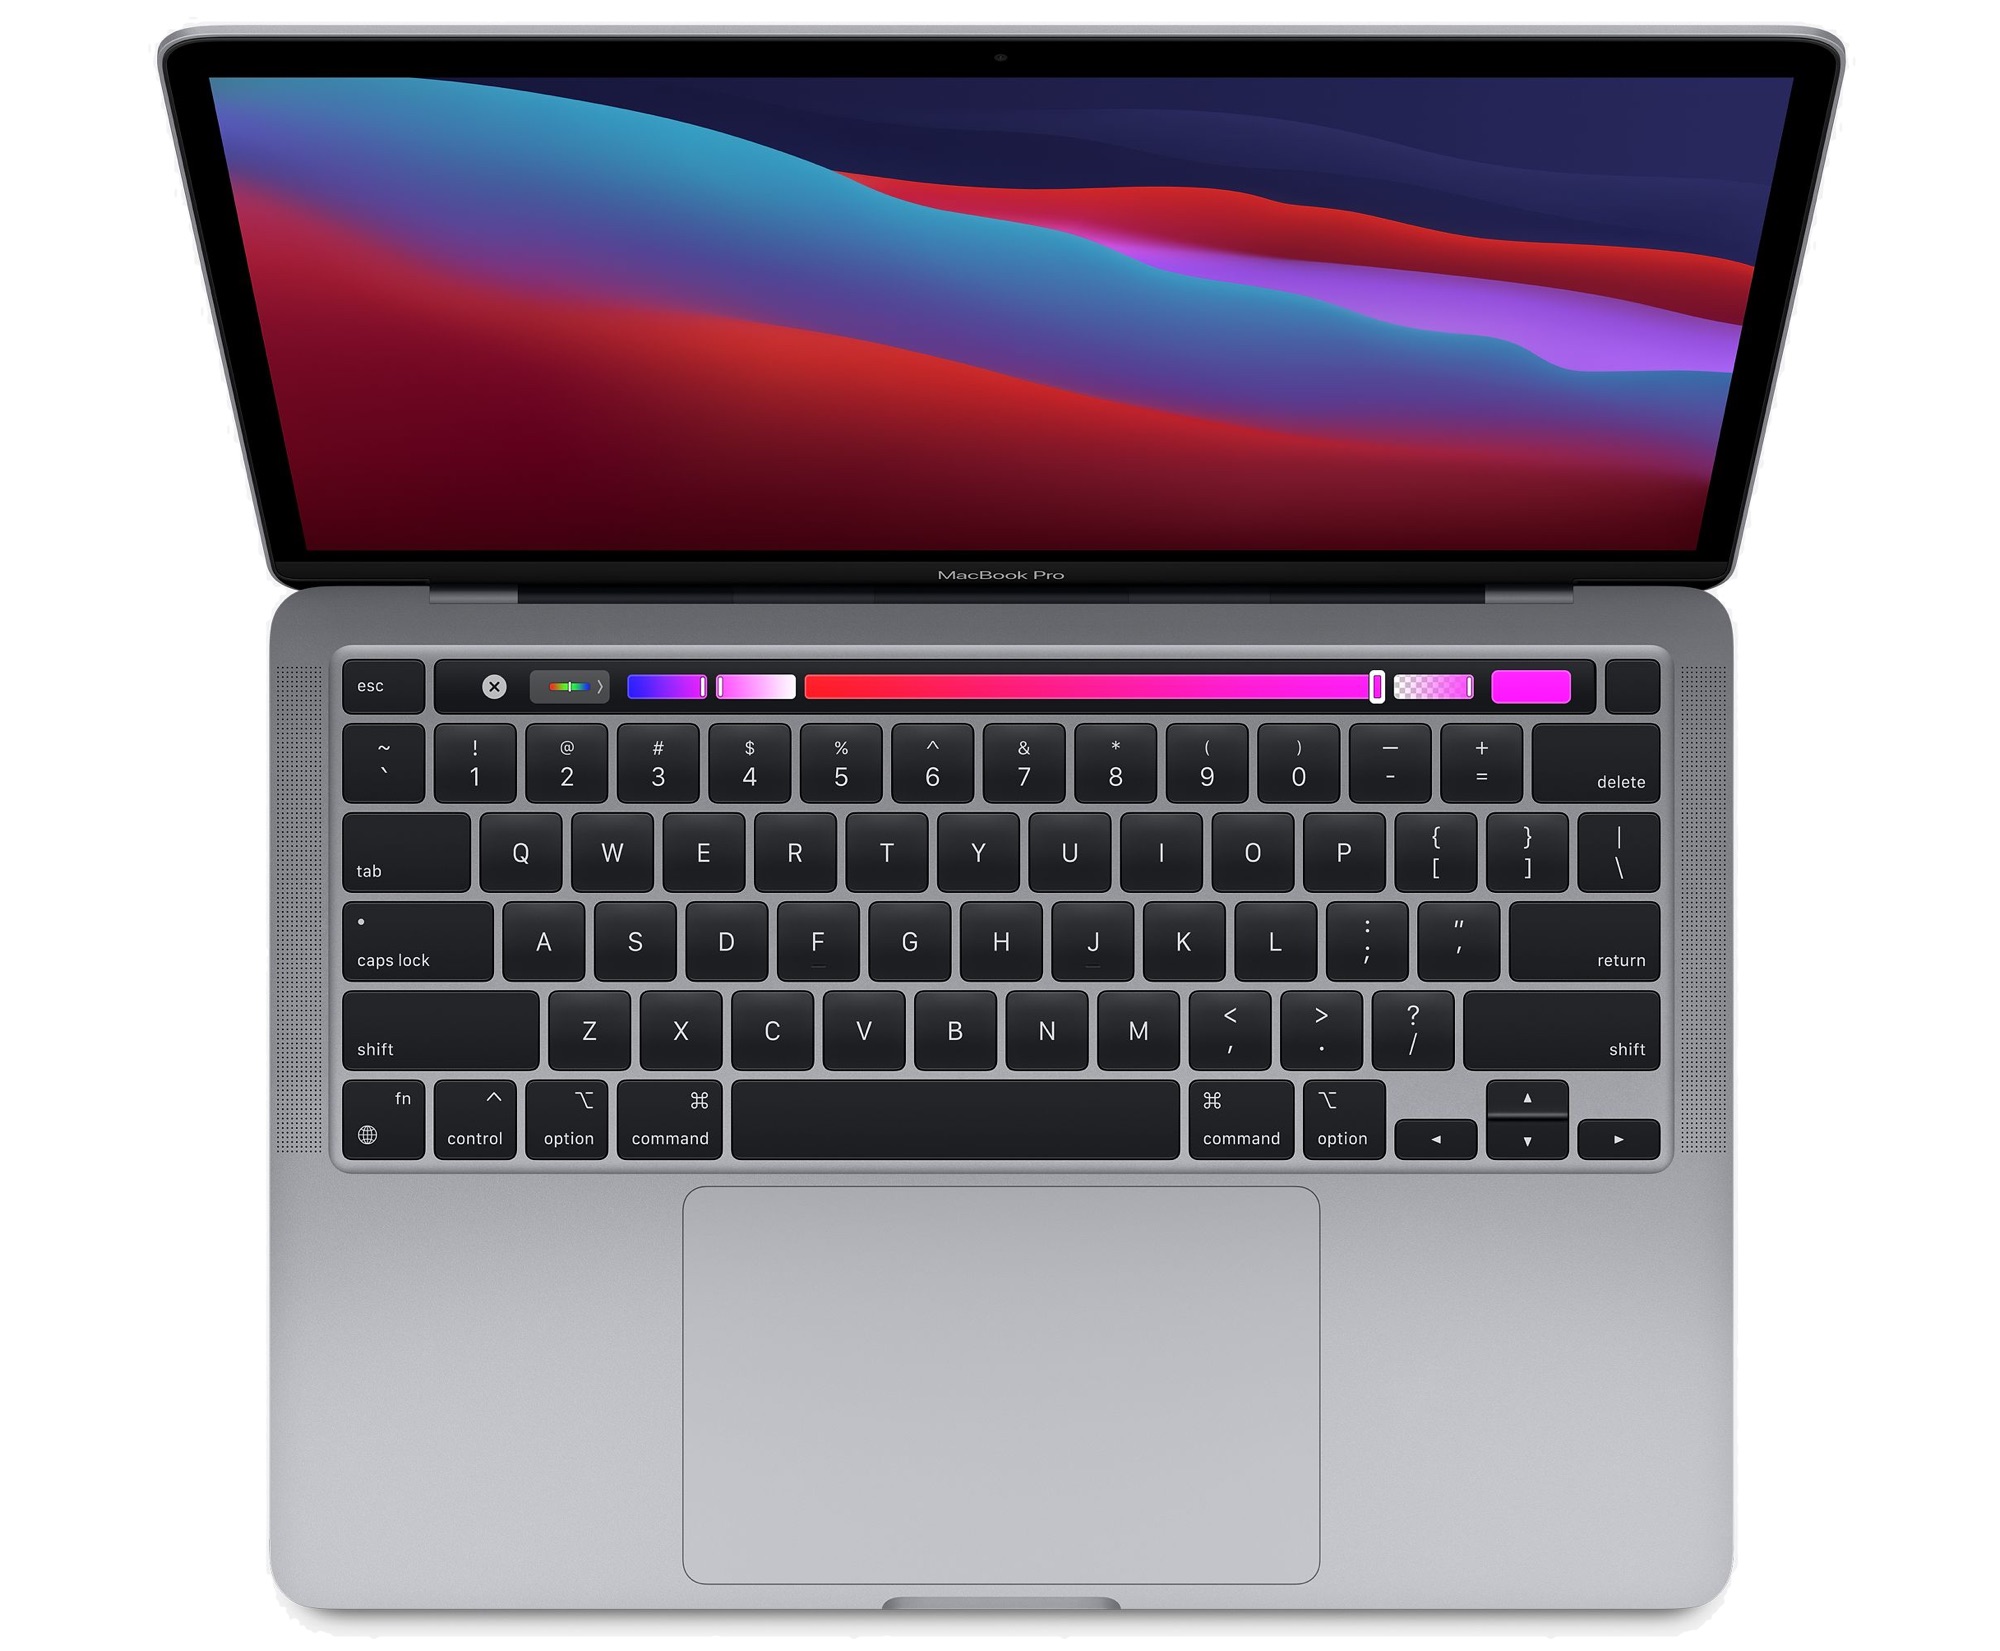 Apple silicon series macbook pro 2020 amazon stick